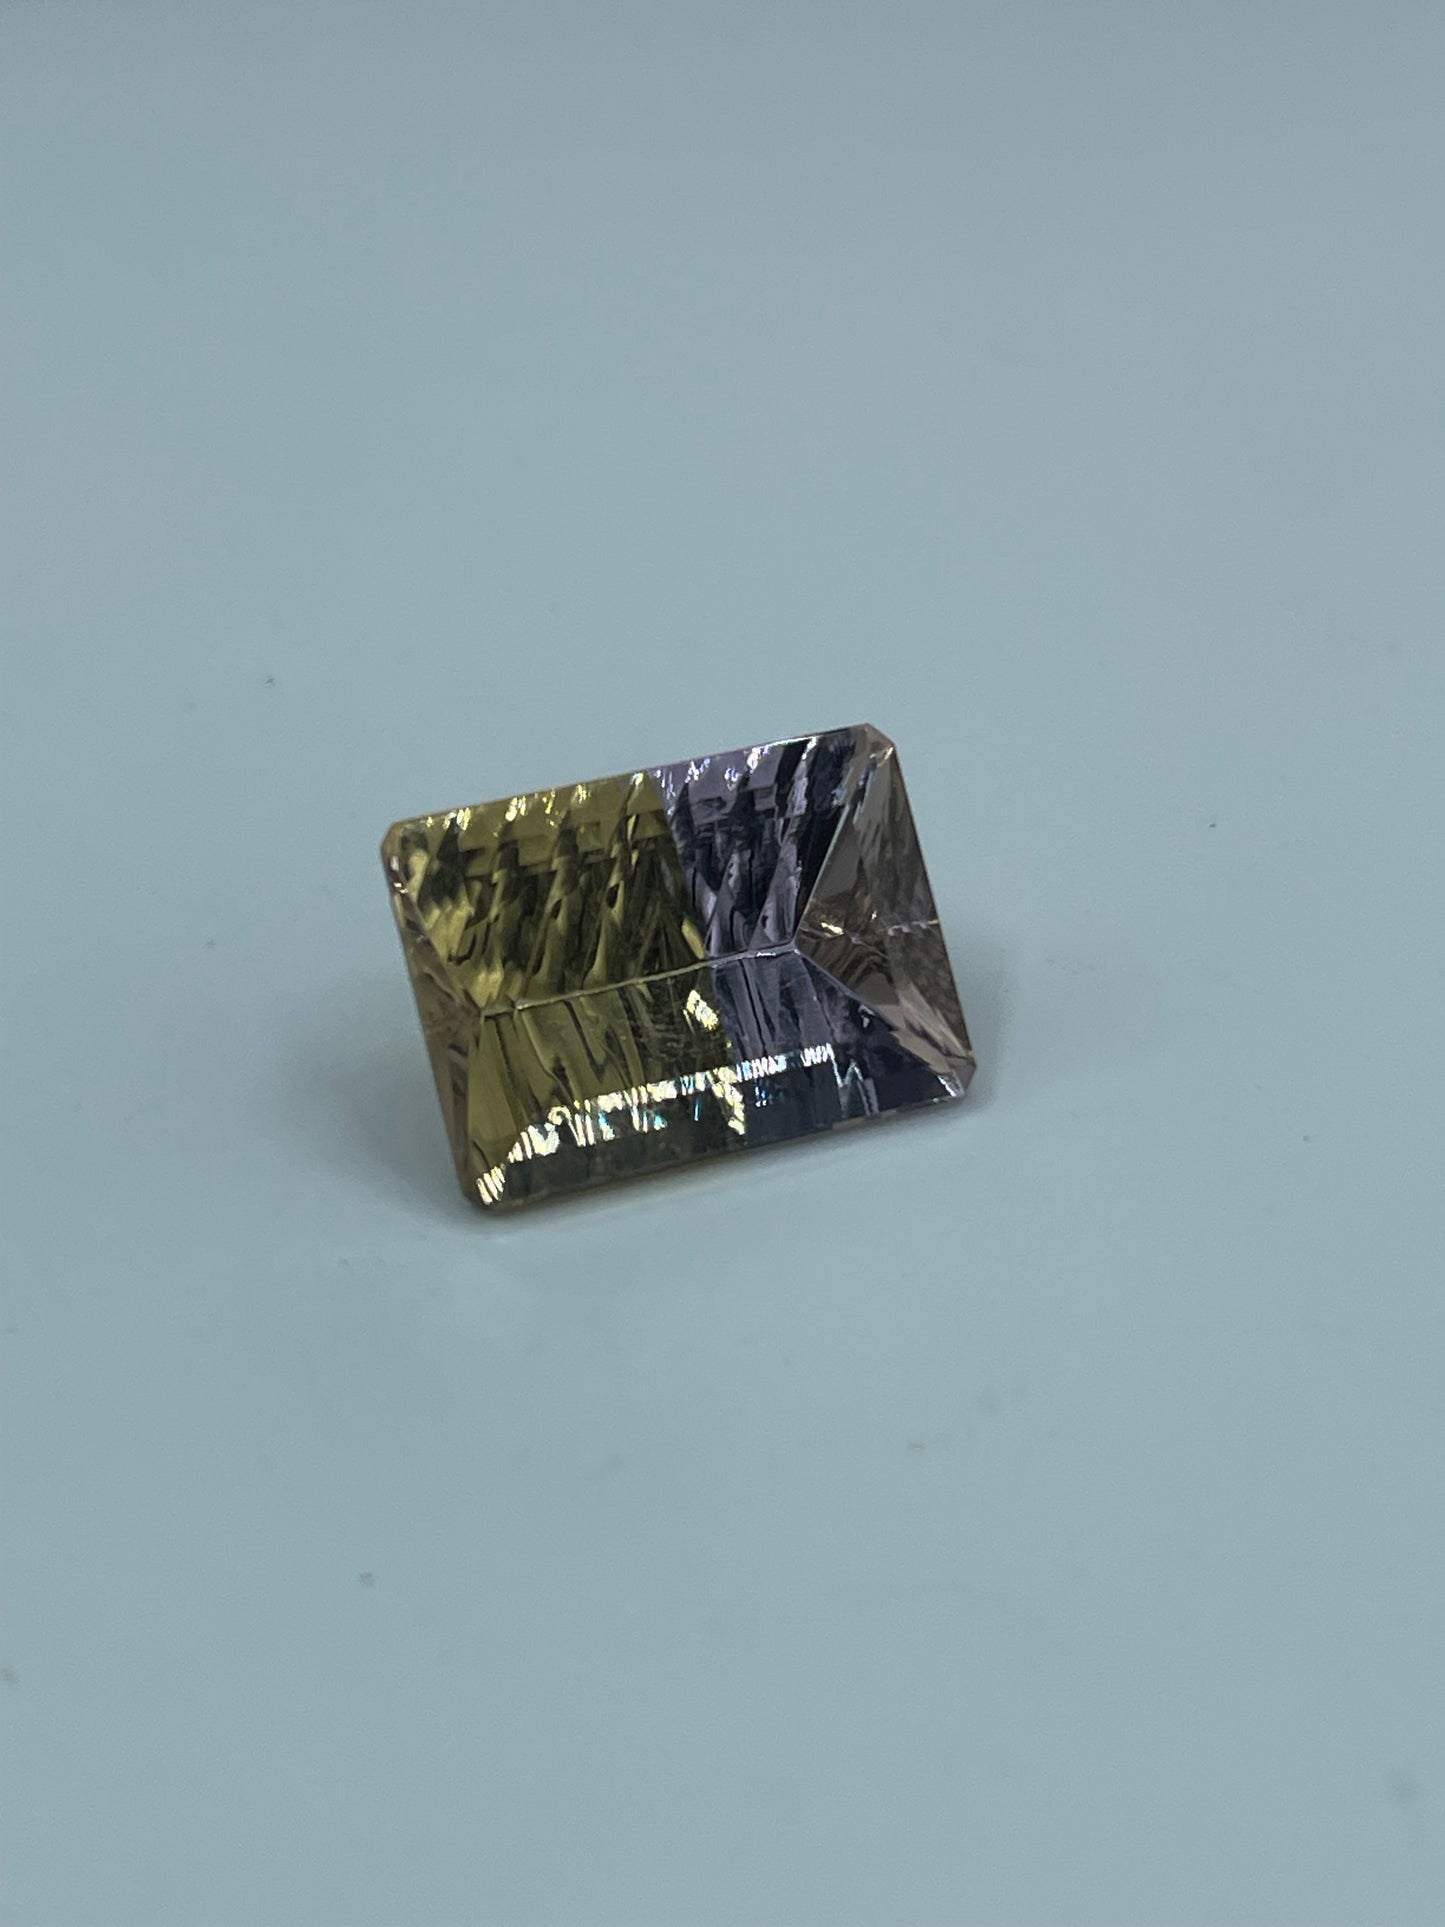 14.48 Carat Natural Bolivian Ametrine Emerald Laser Cut Loose Gemstone (18 x 13 x 8.7 MM)